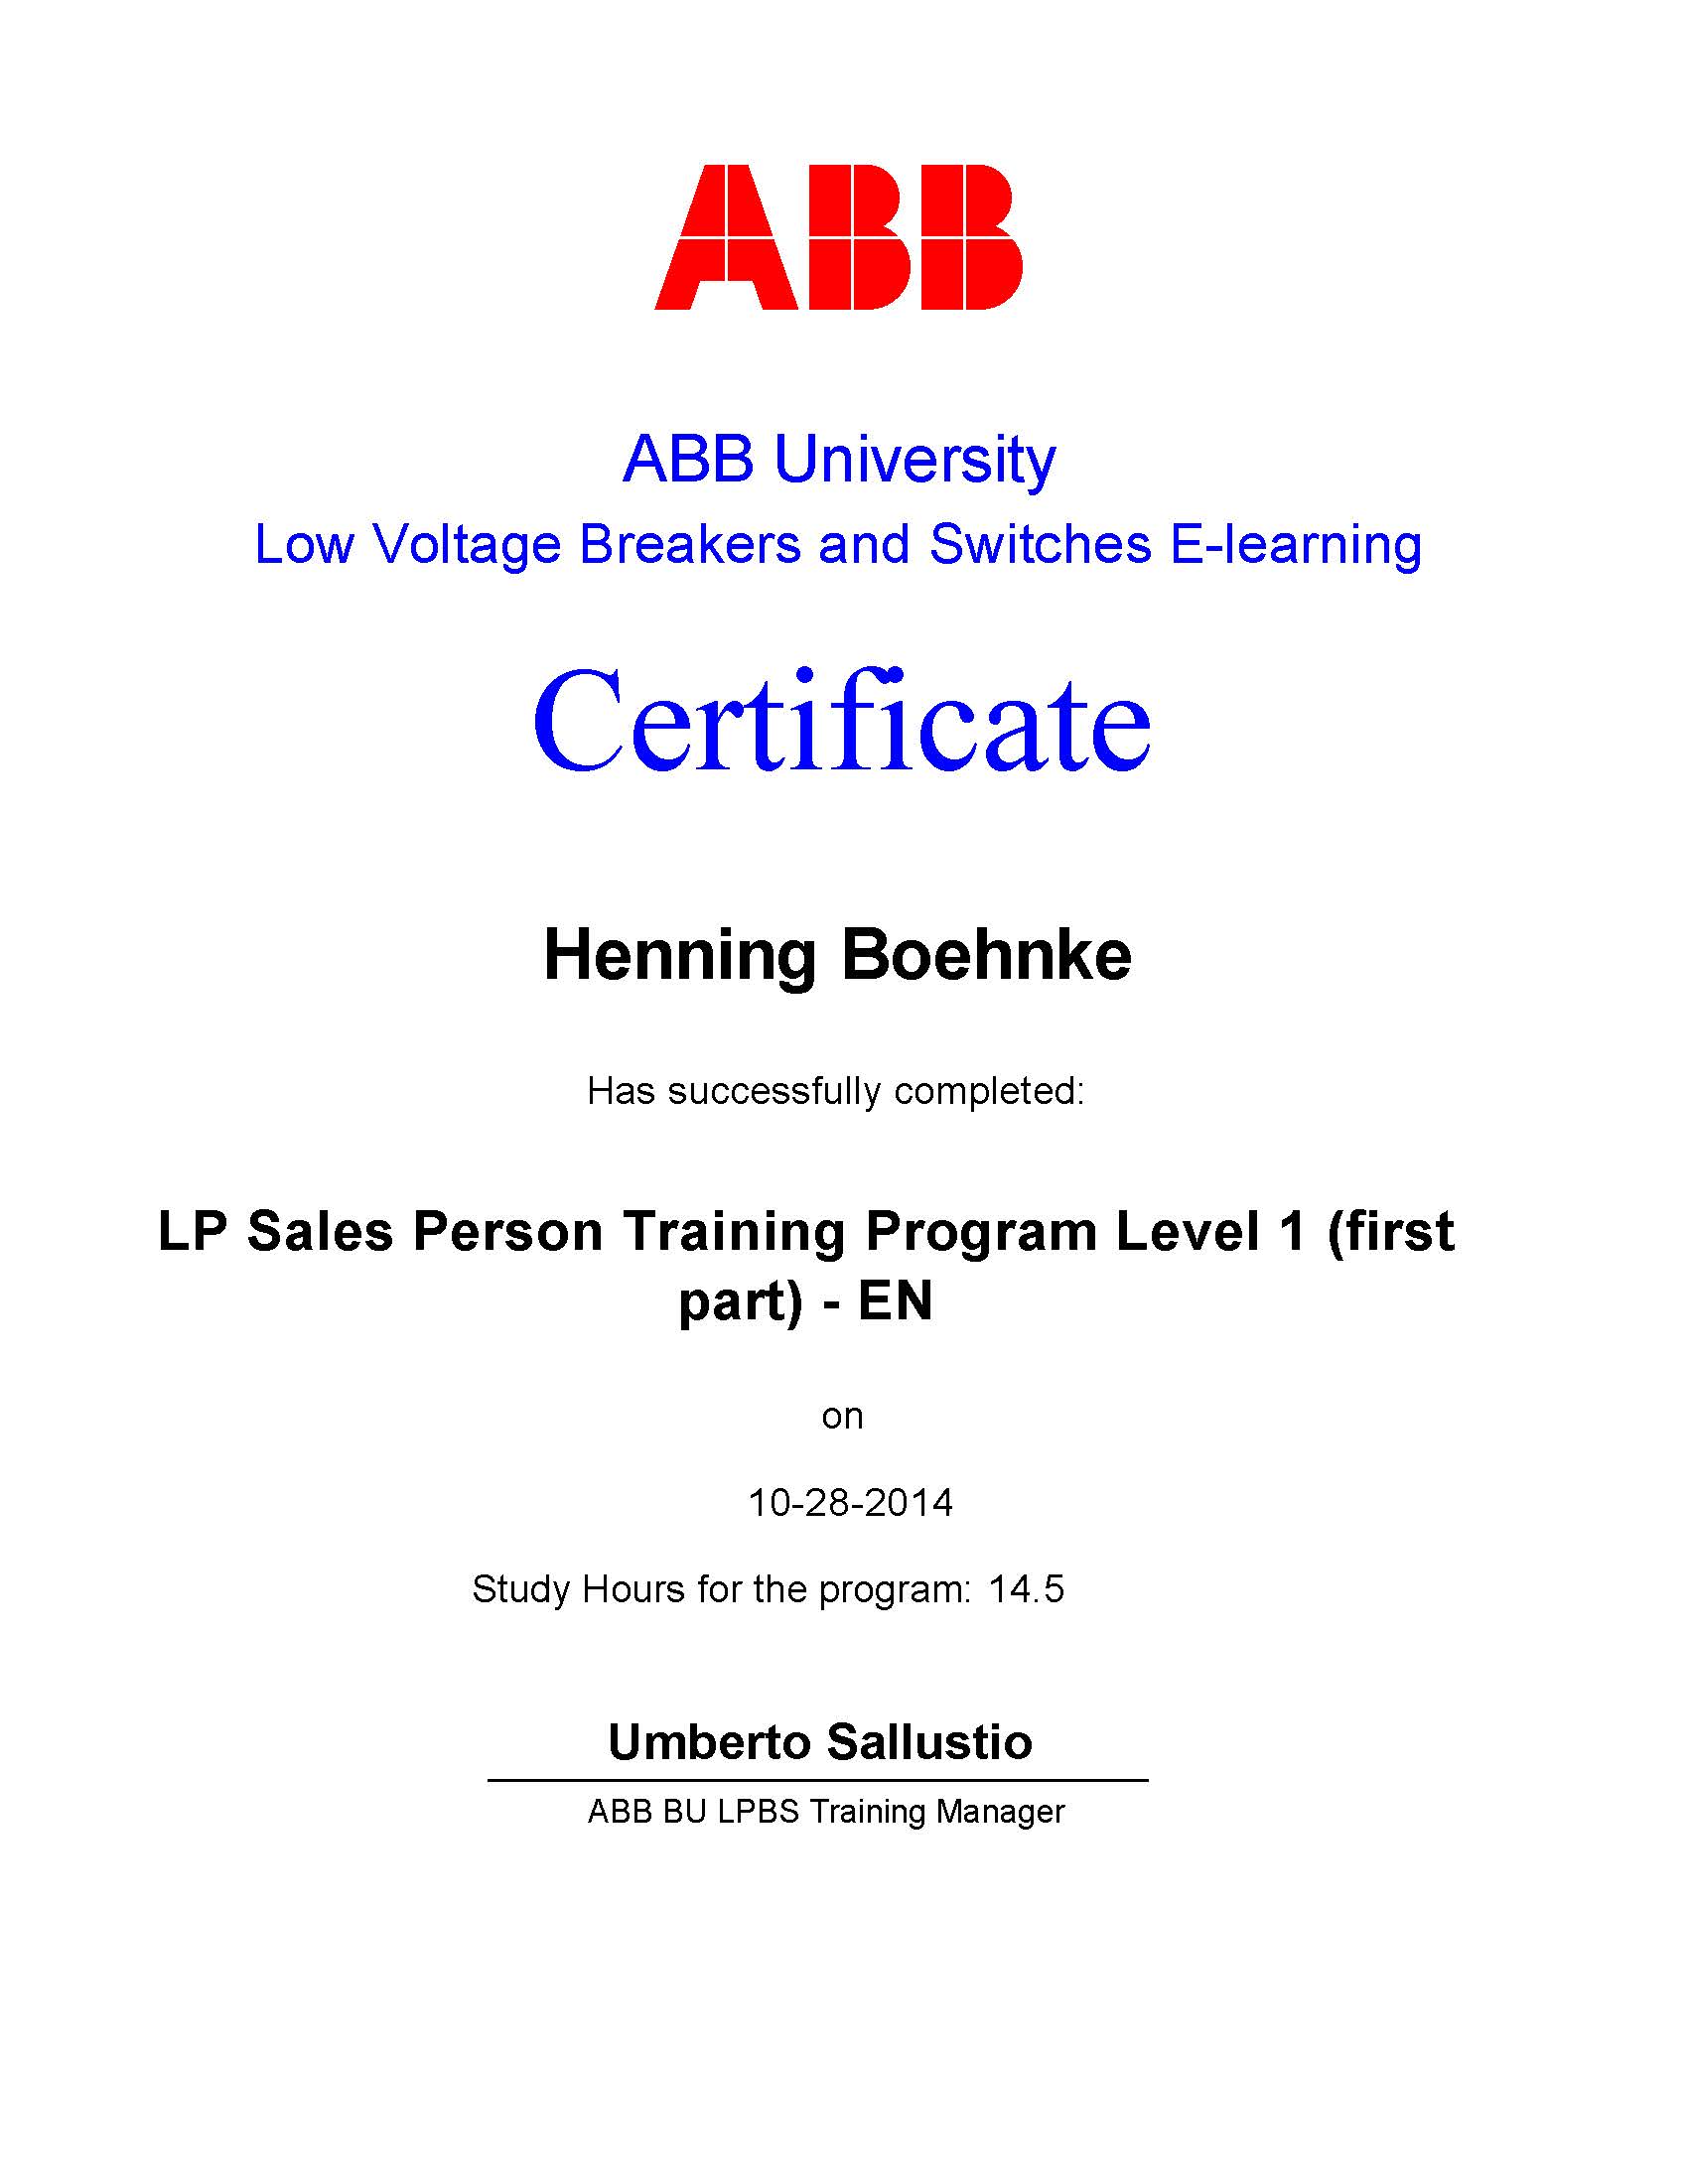 LP Sales Person Training Program Level 1 (First Part)